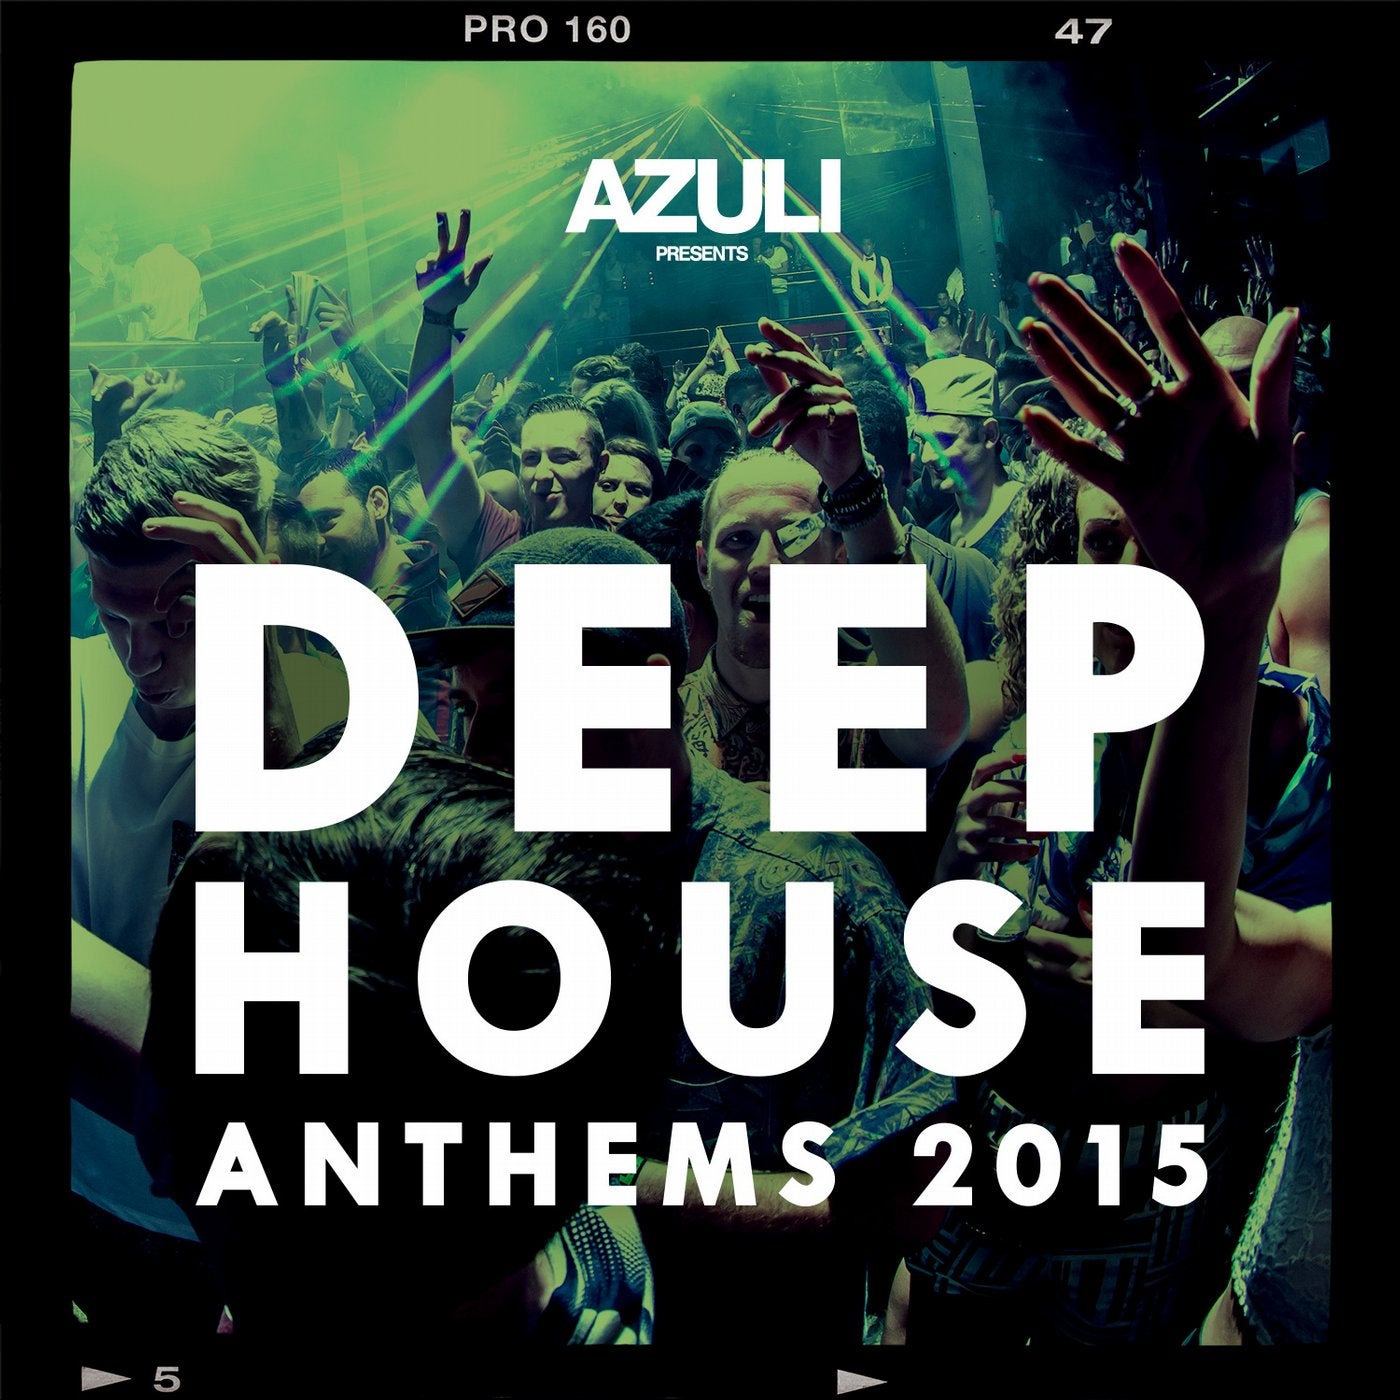 Azuli presents Deep House Anthems 2015